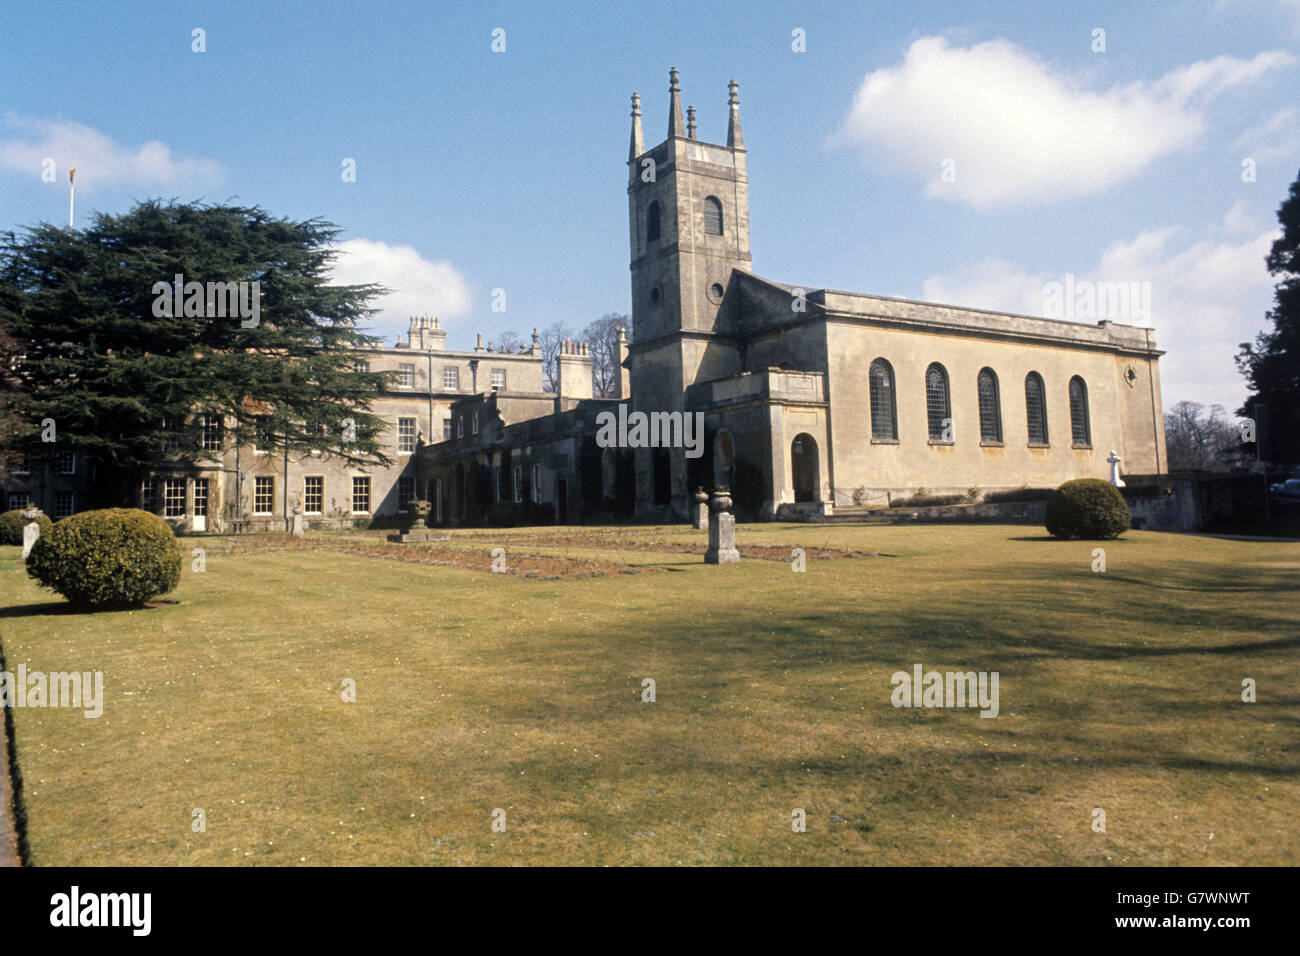 Buildings and Landmarks - Badminton Church Stock Photo